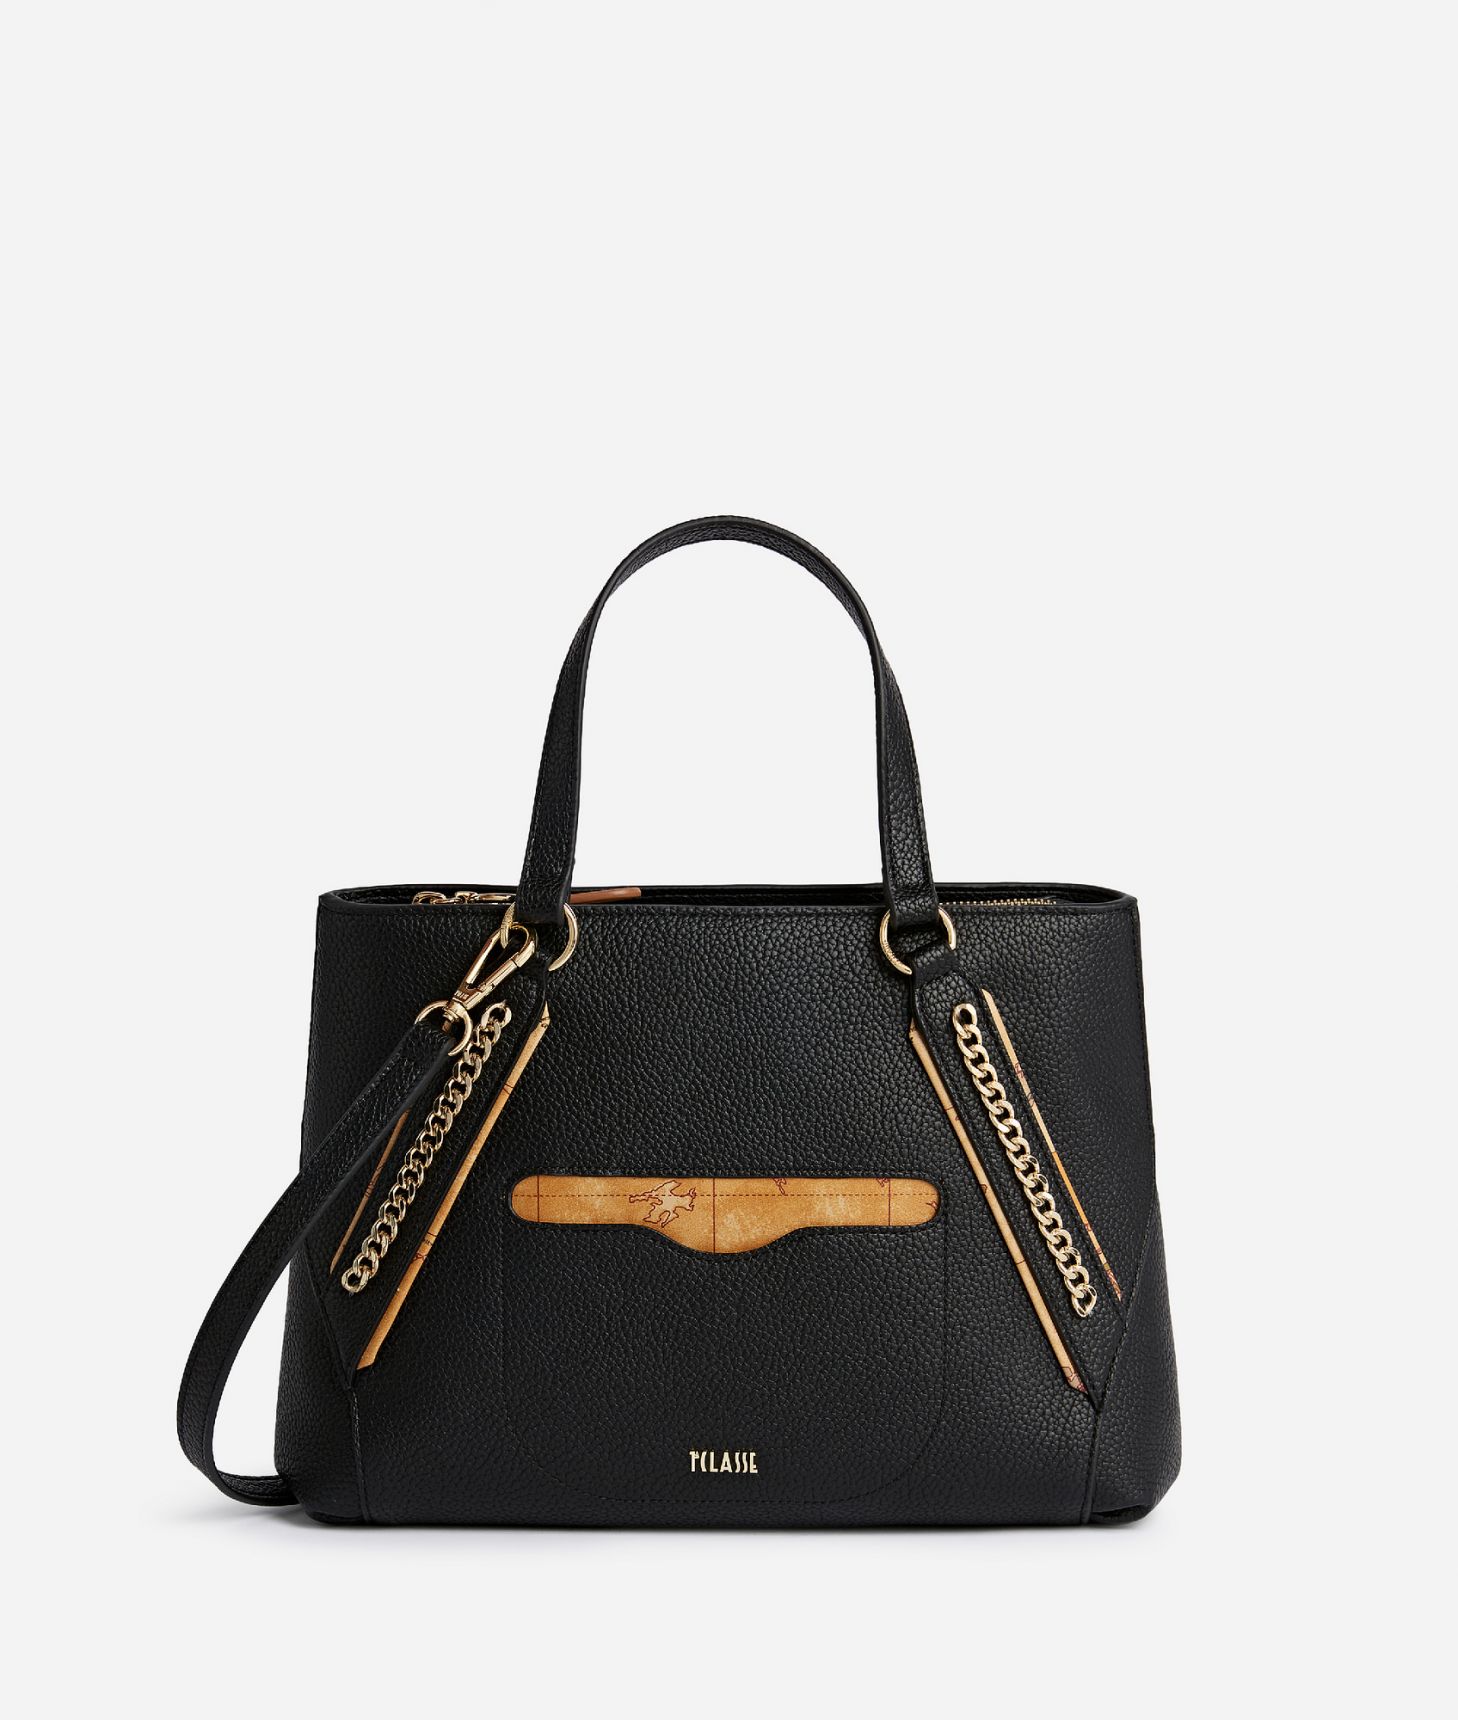 Madison handbag with crossbody strap Black,front